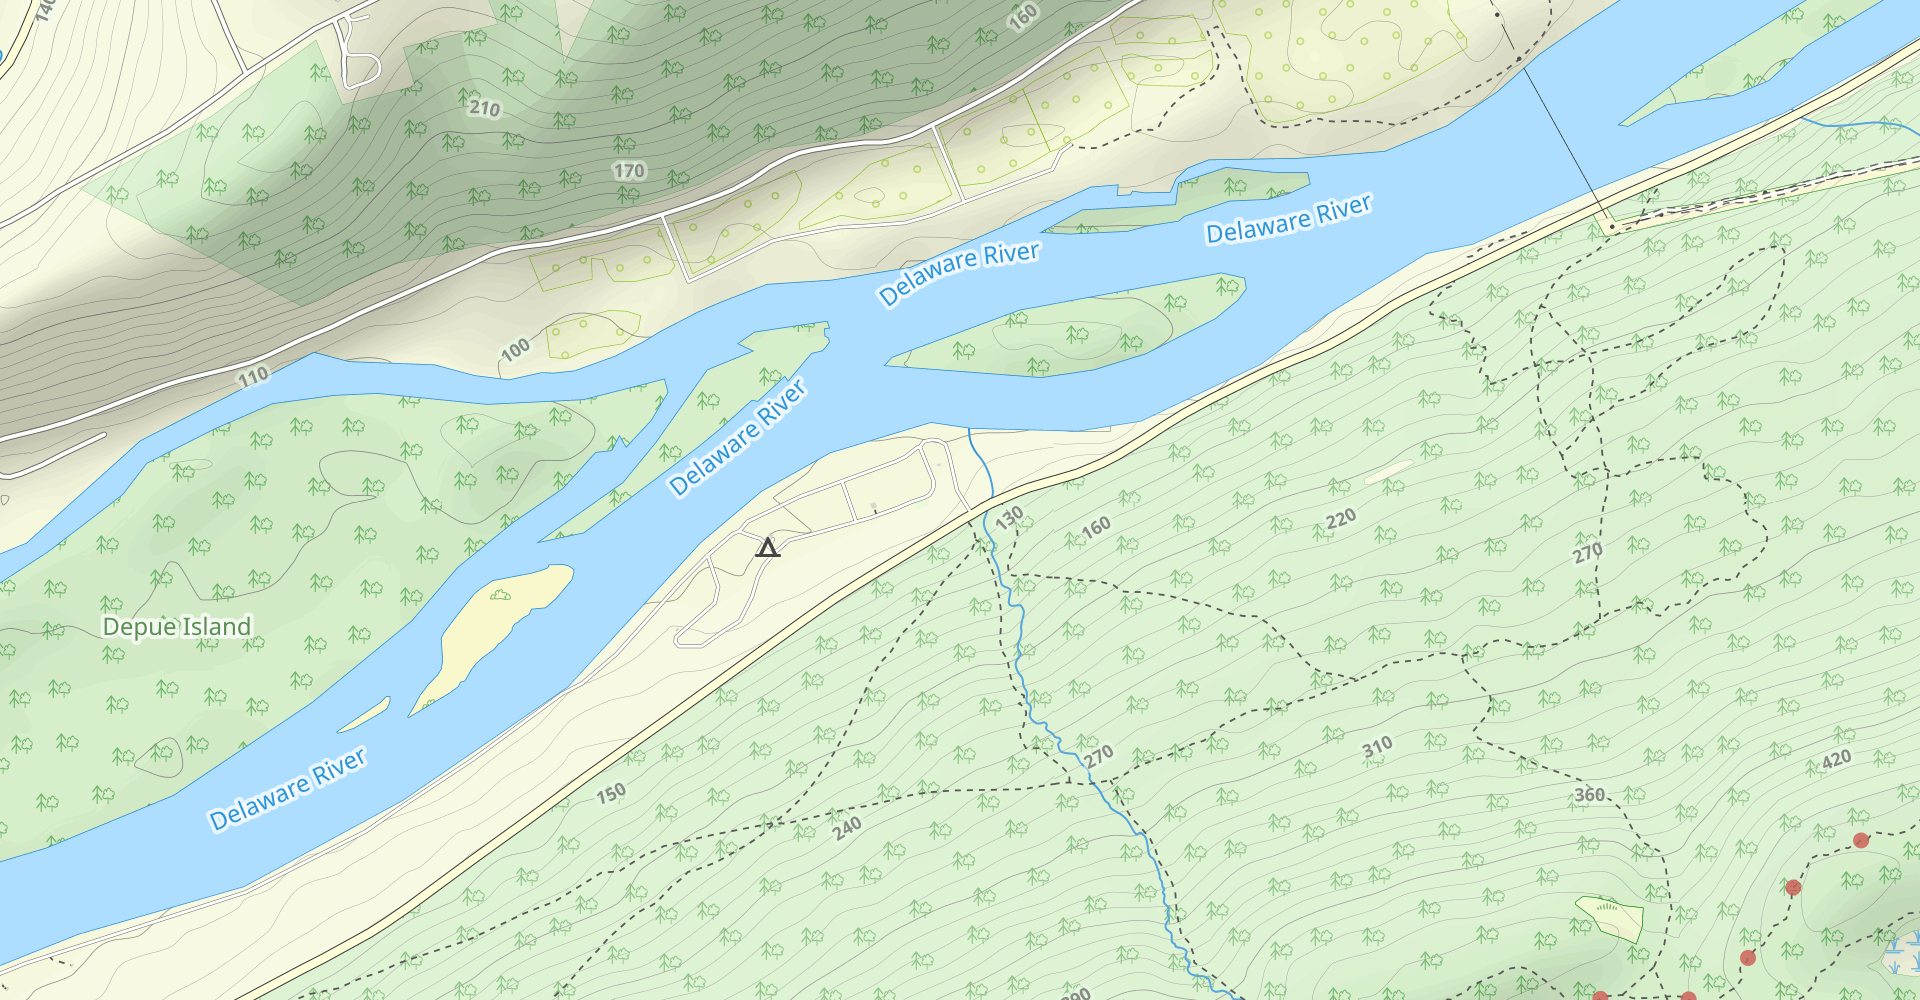 Douglas, Appalachian, and Garvey Springs Trails Loop